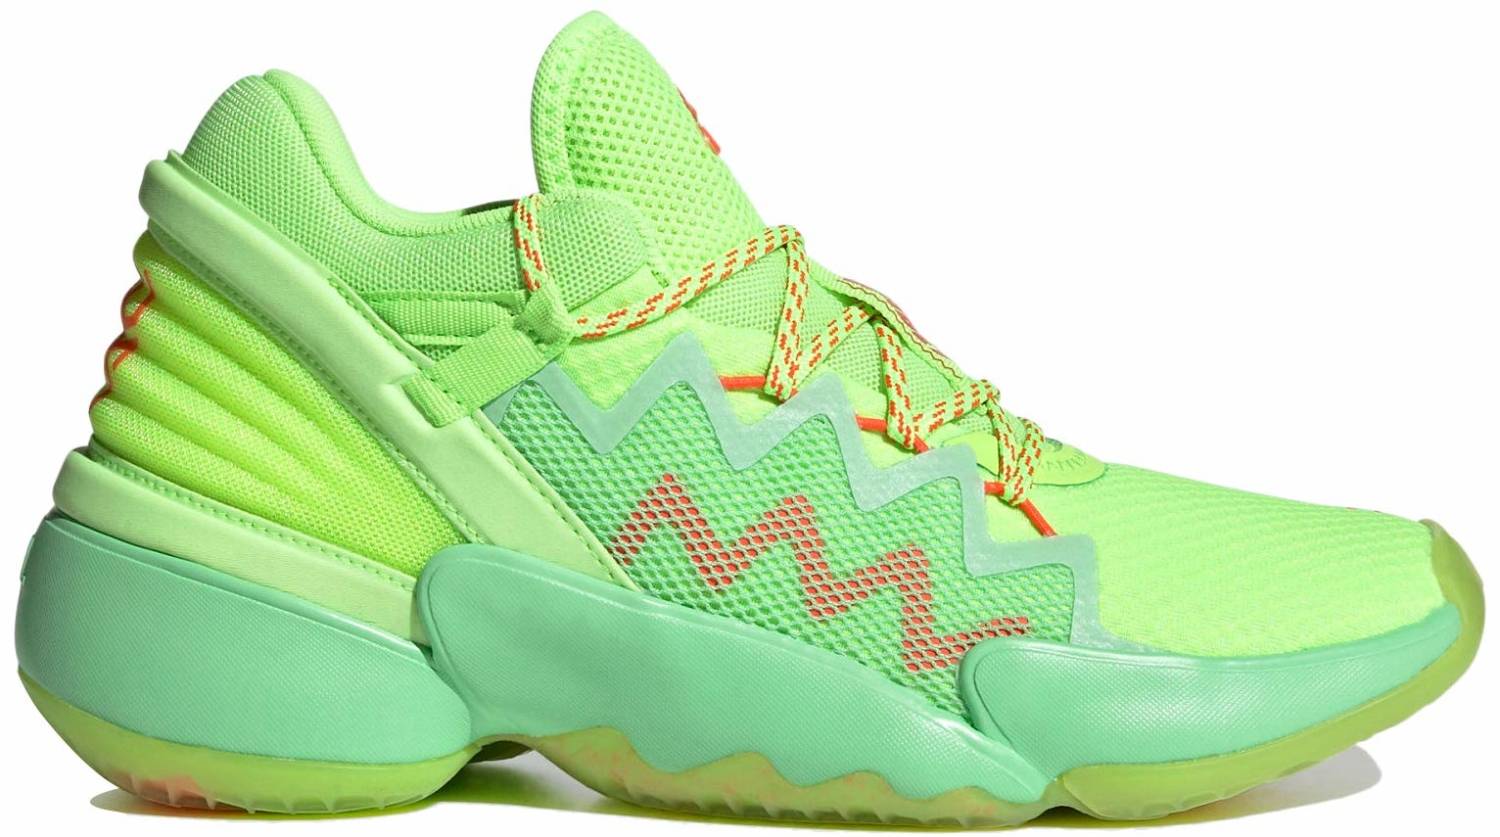 Save 31% on Green Basketball Shoes (50 